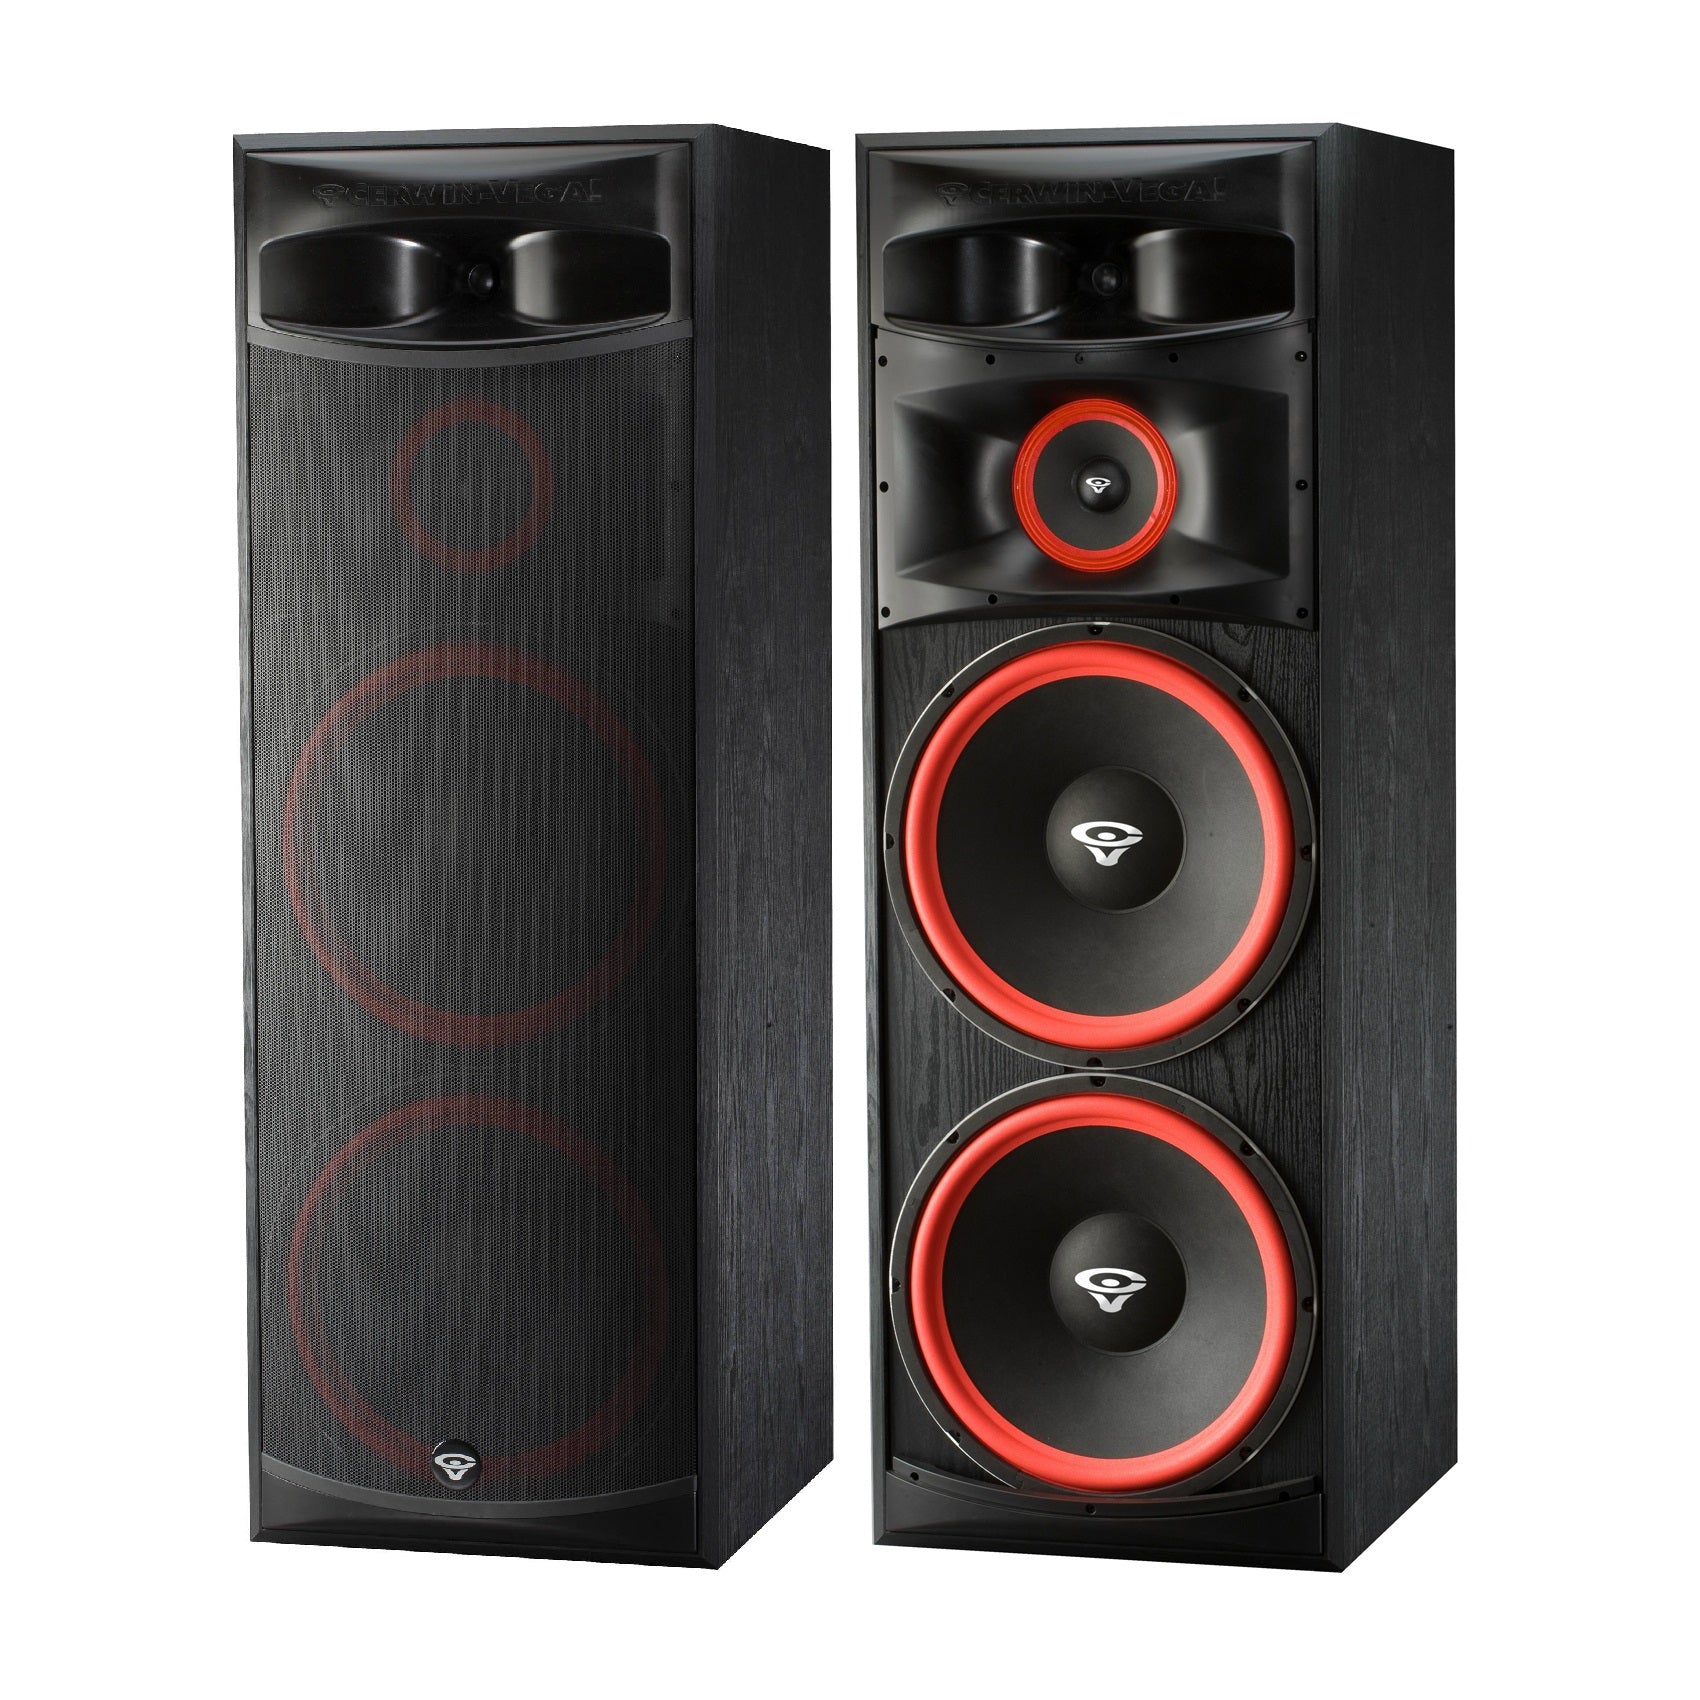 Cerwin Vega XLS-215 Dual 15" 3 Way Floorstanding Tower Speaker (PAIR)